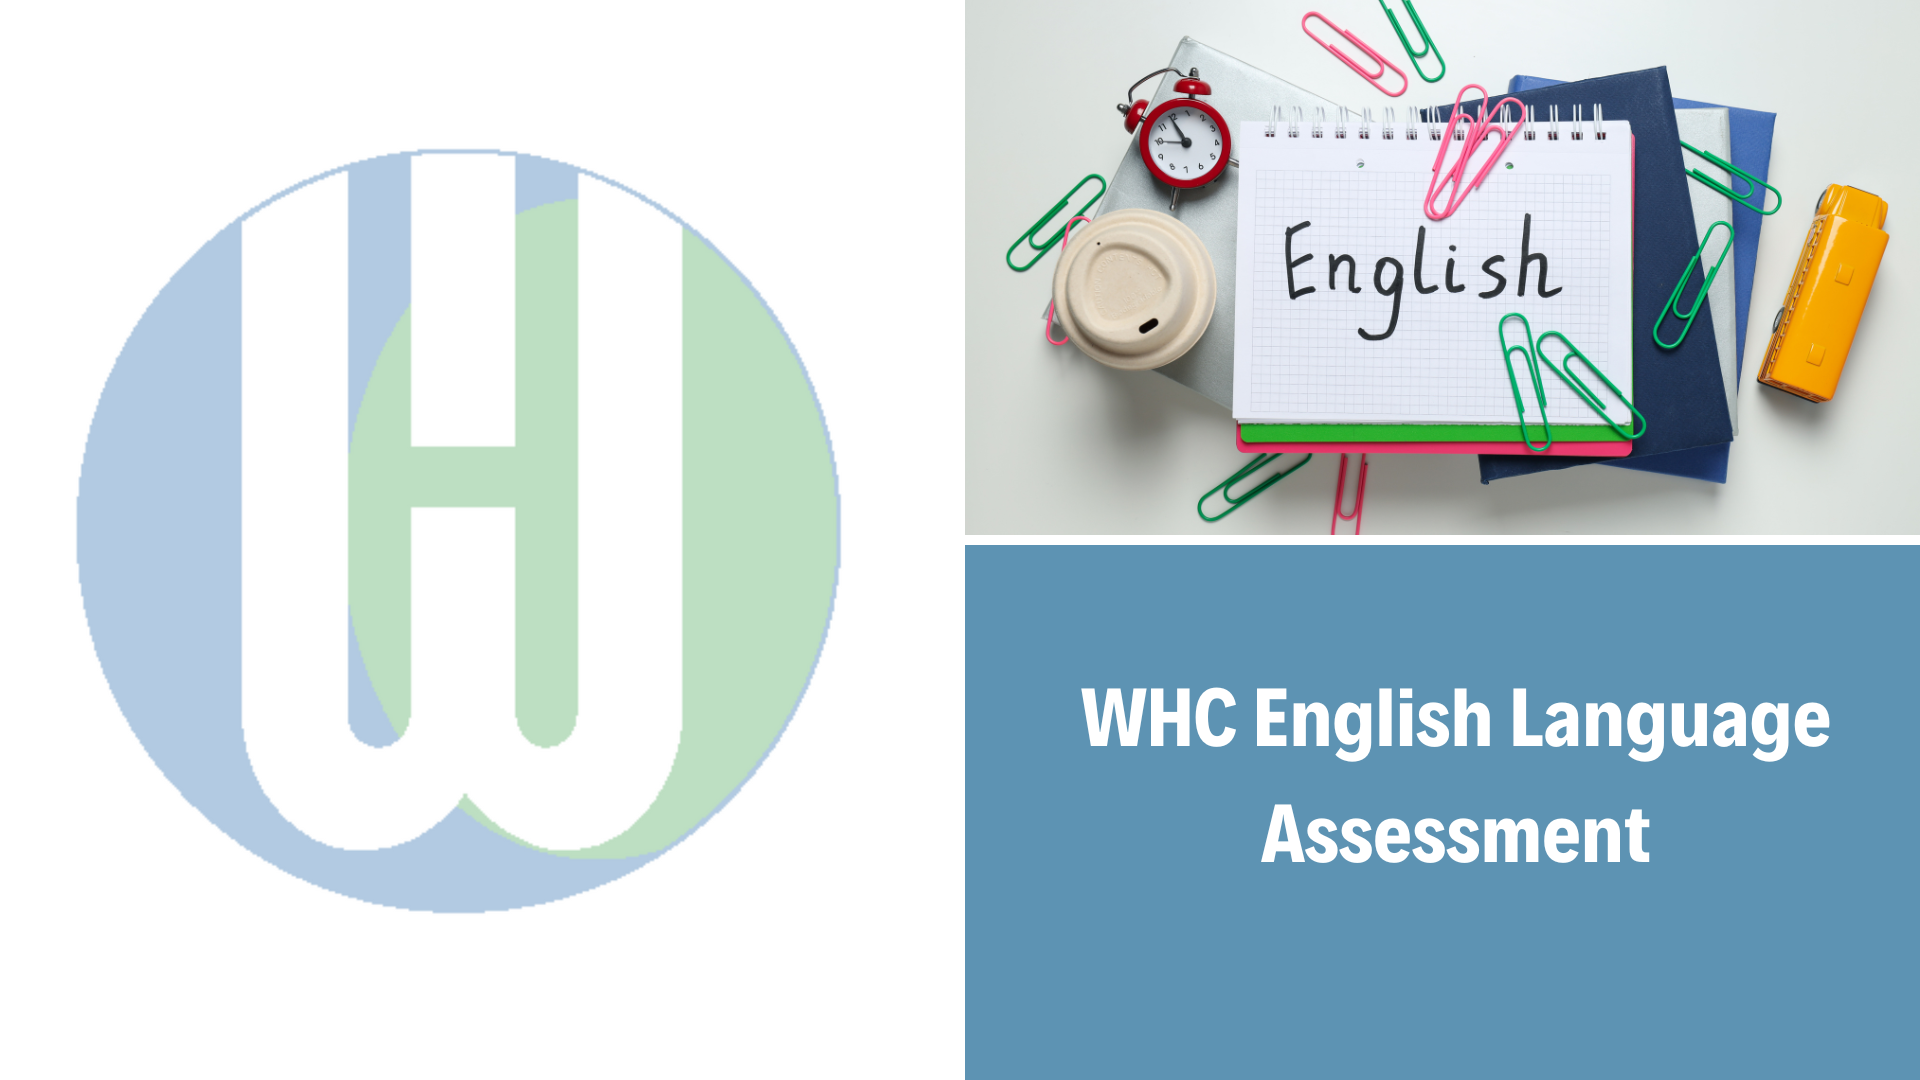 WHC English Language Assessment